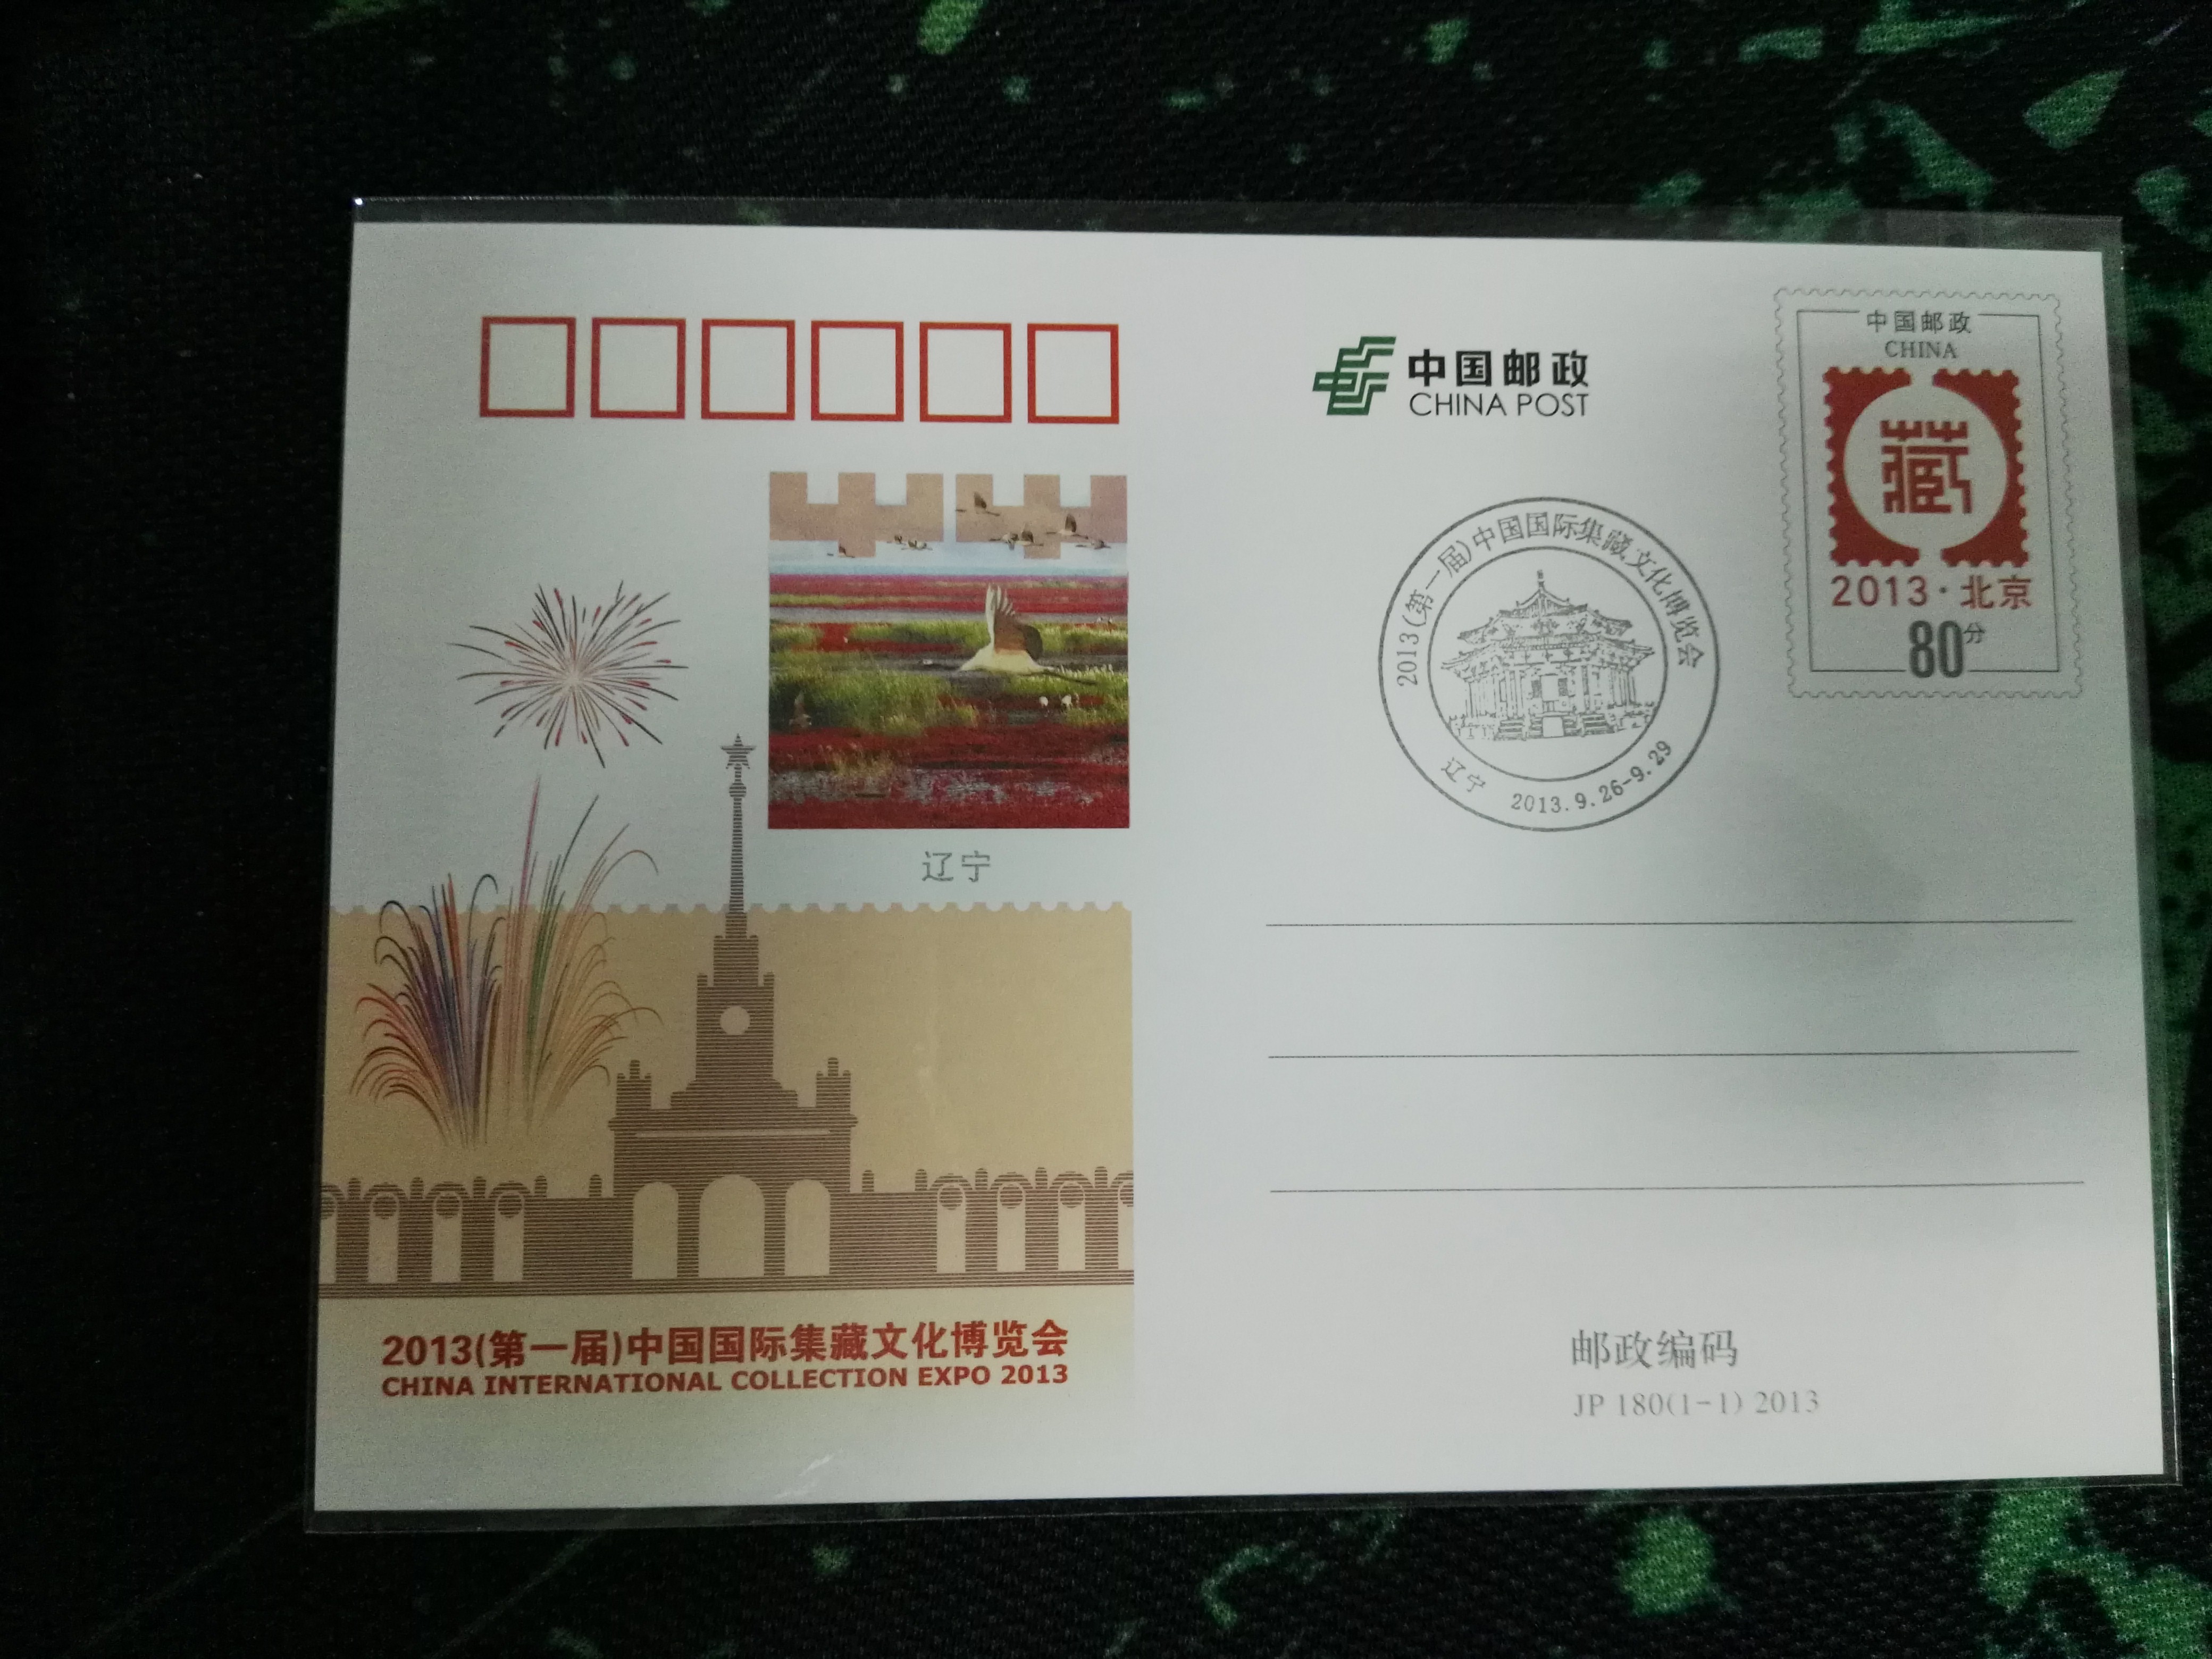 JP180 2013第一届国际集藏文化博览会纪念邮资片纪念戳【辽宁版】